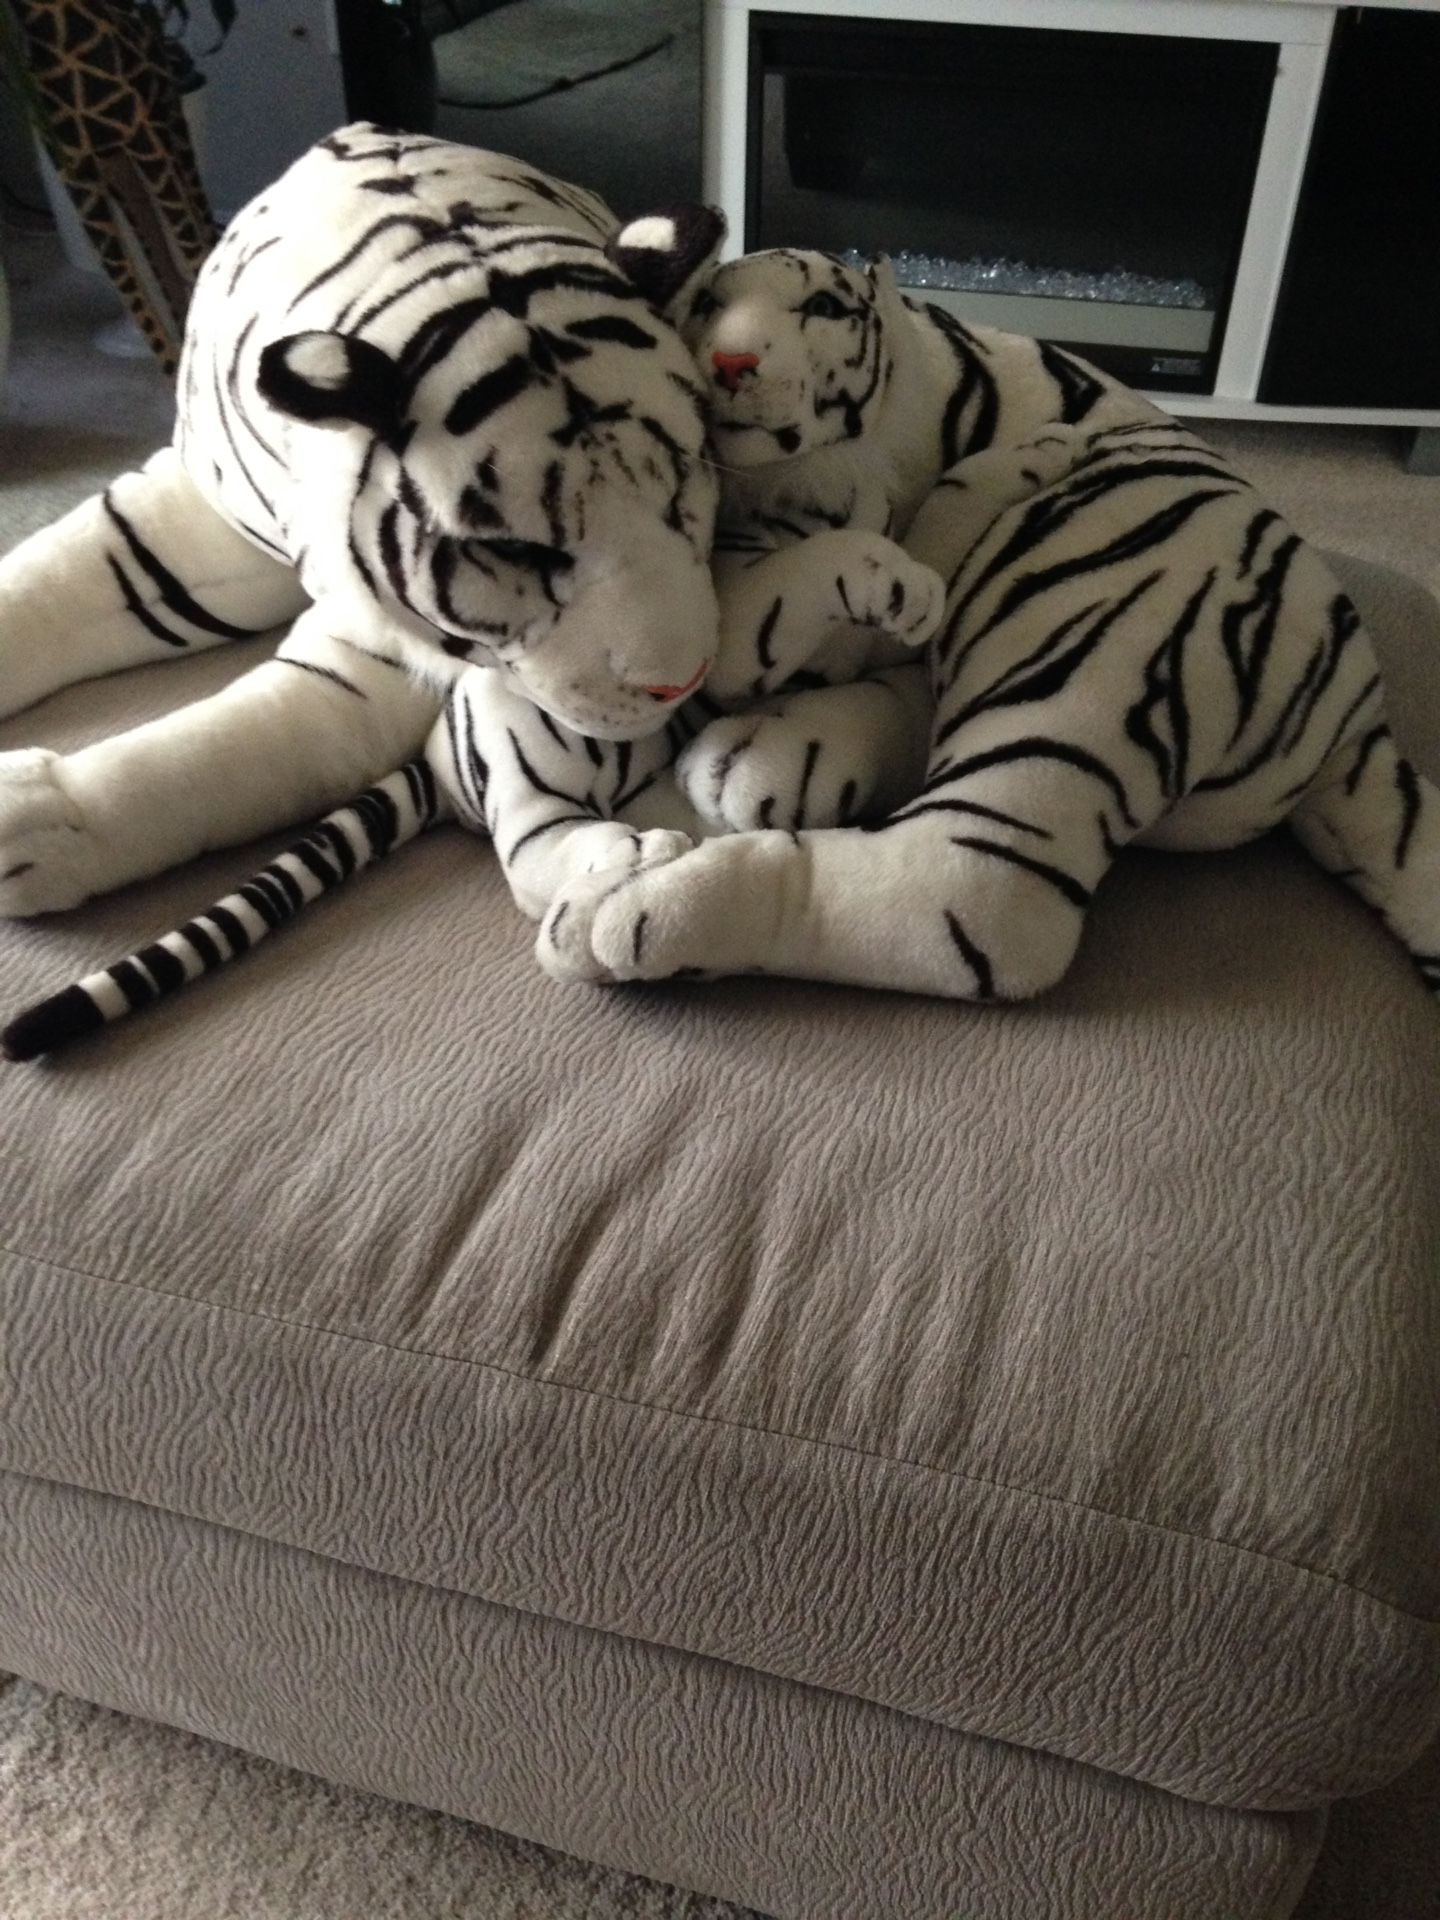 Toy Stuffed White Tiger